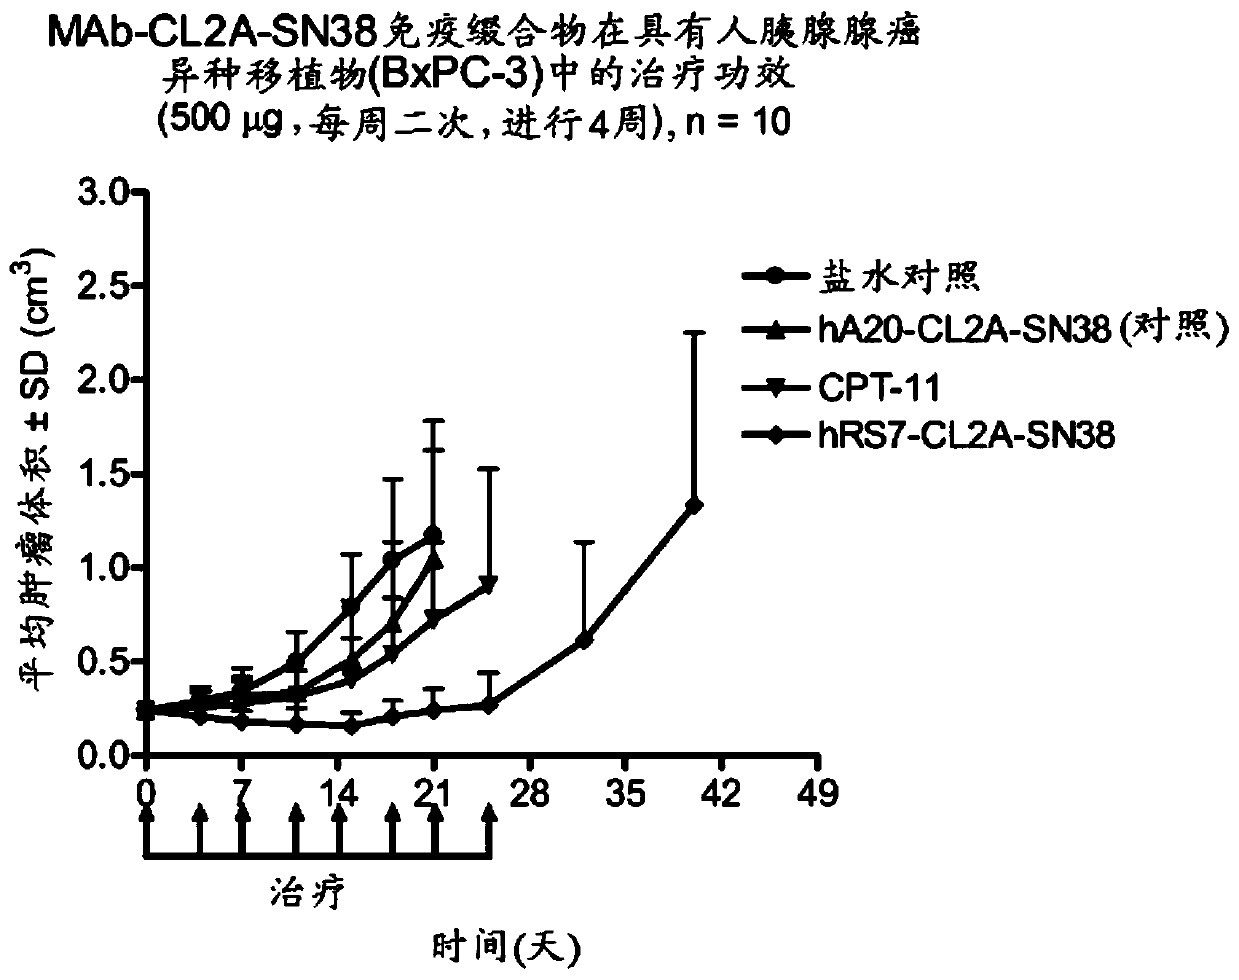 Antibody-SN-38 immunoconjugates with CL2A linker